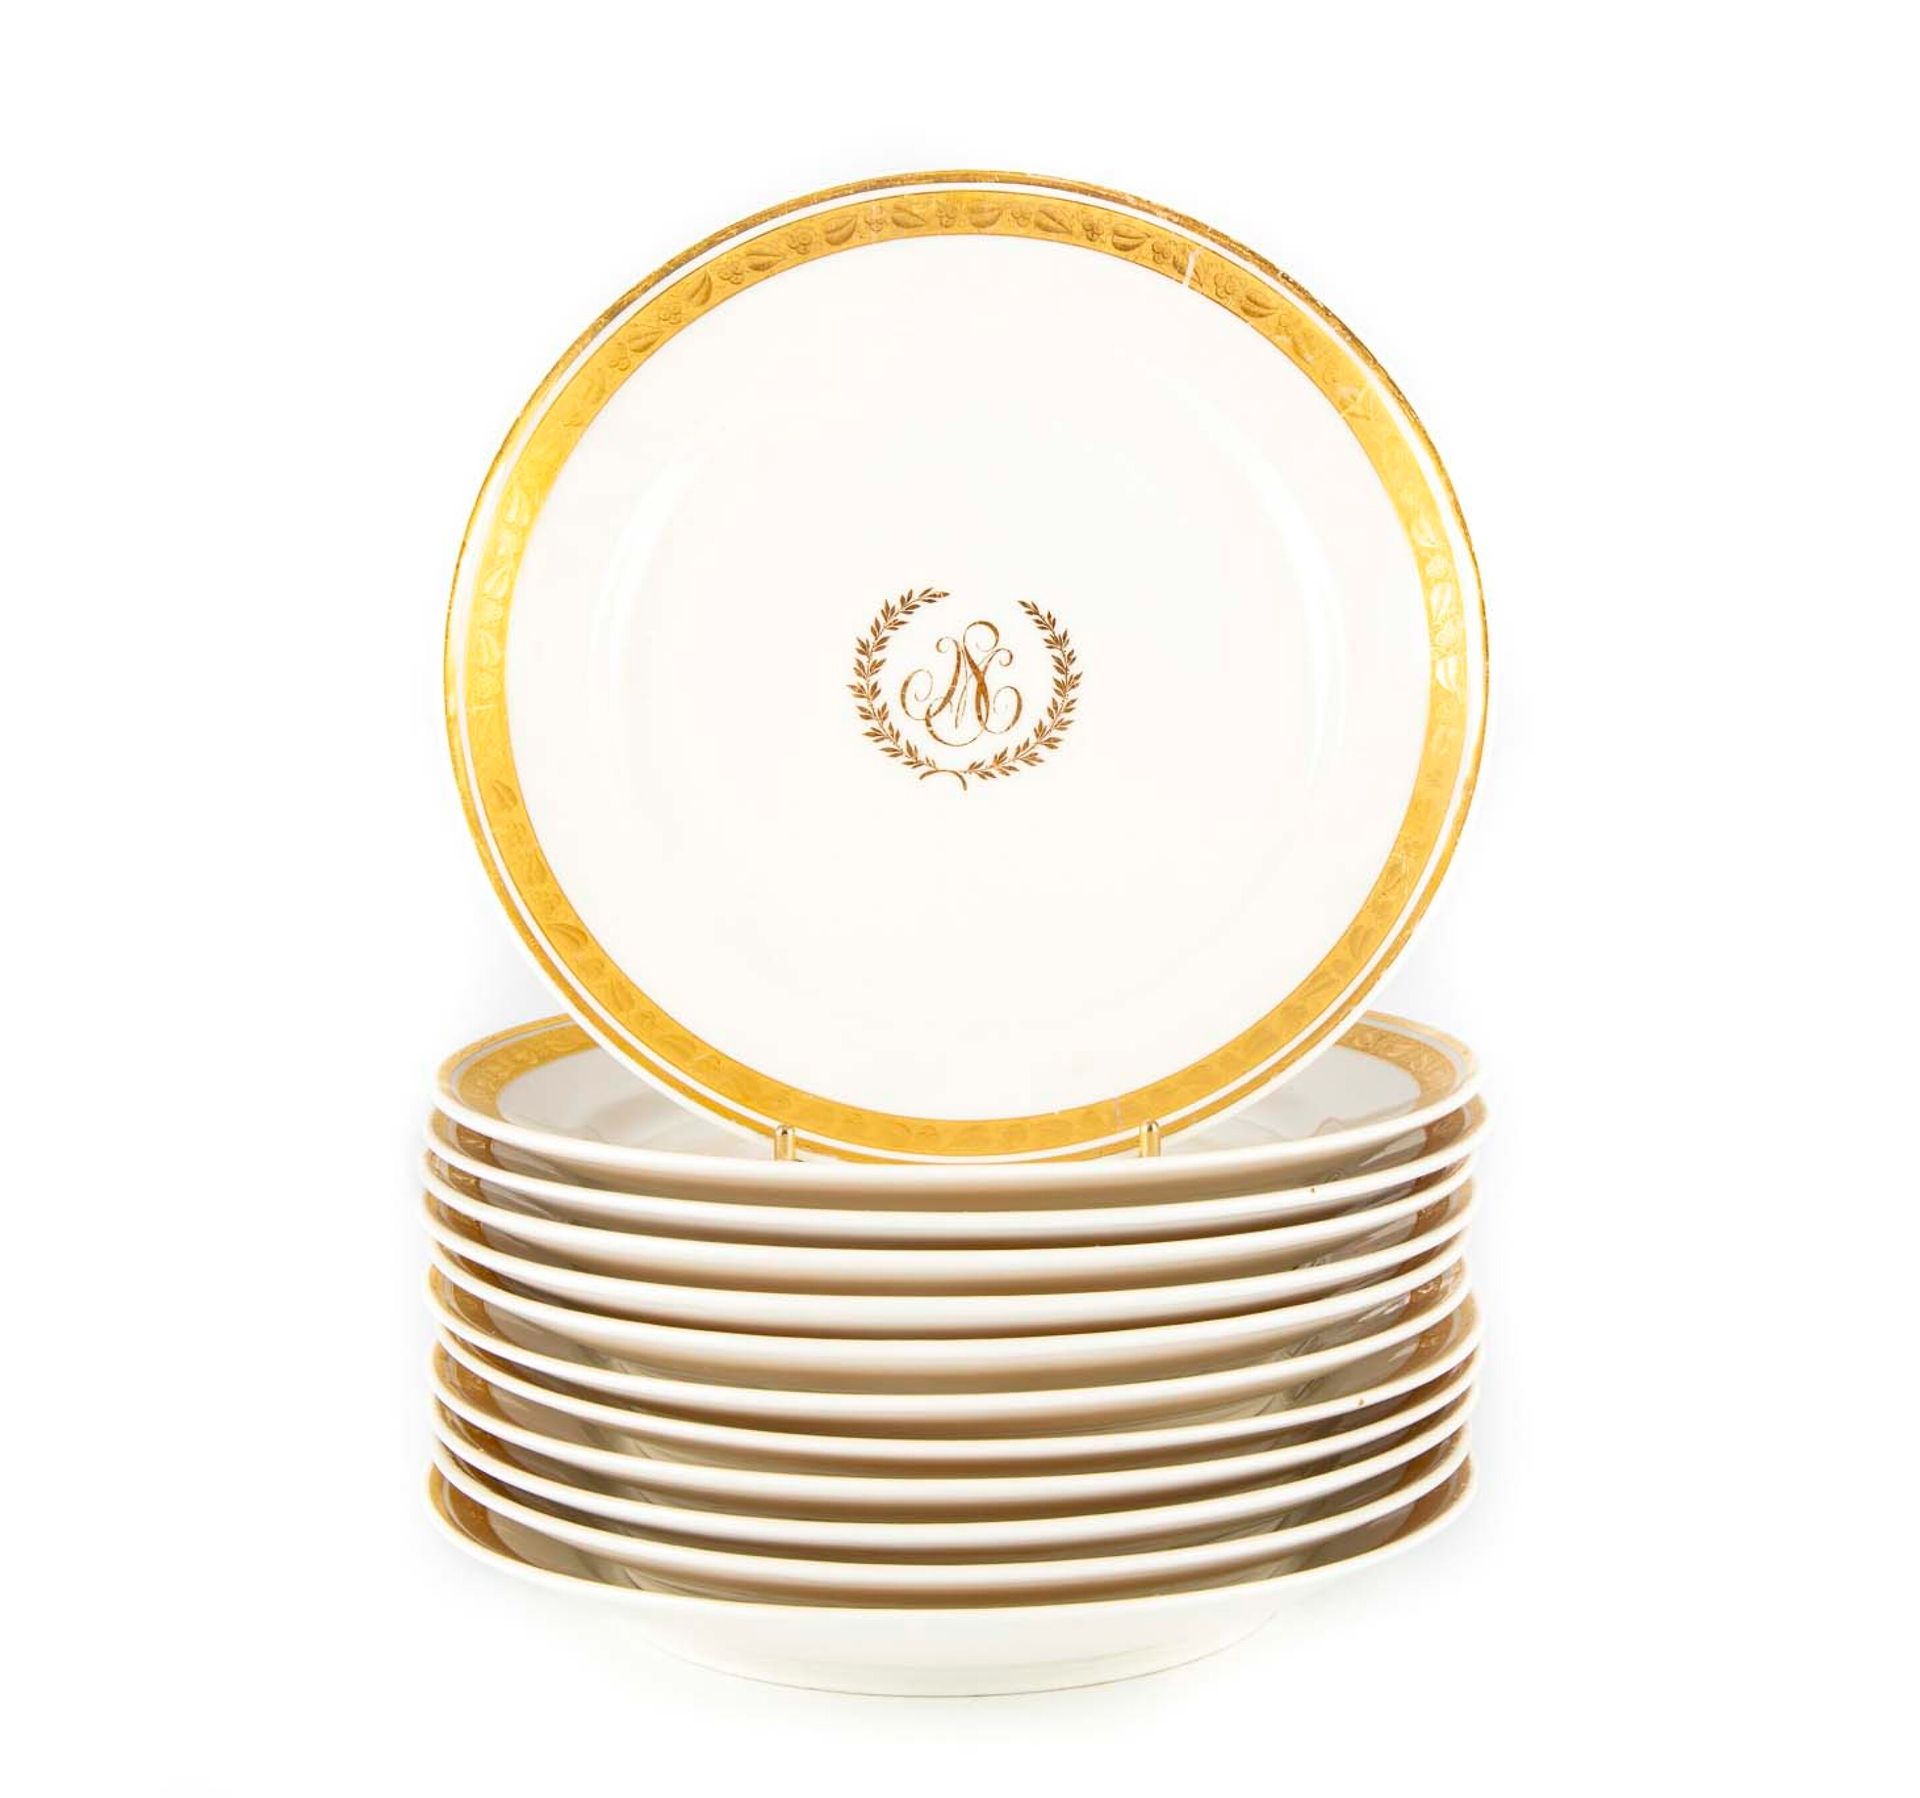 PARIS PARIS

Suite of 12 white porcelain plates with a gilded border of leaves a&hellip;